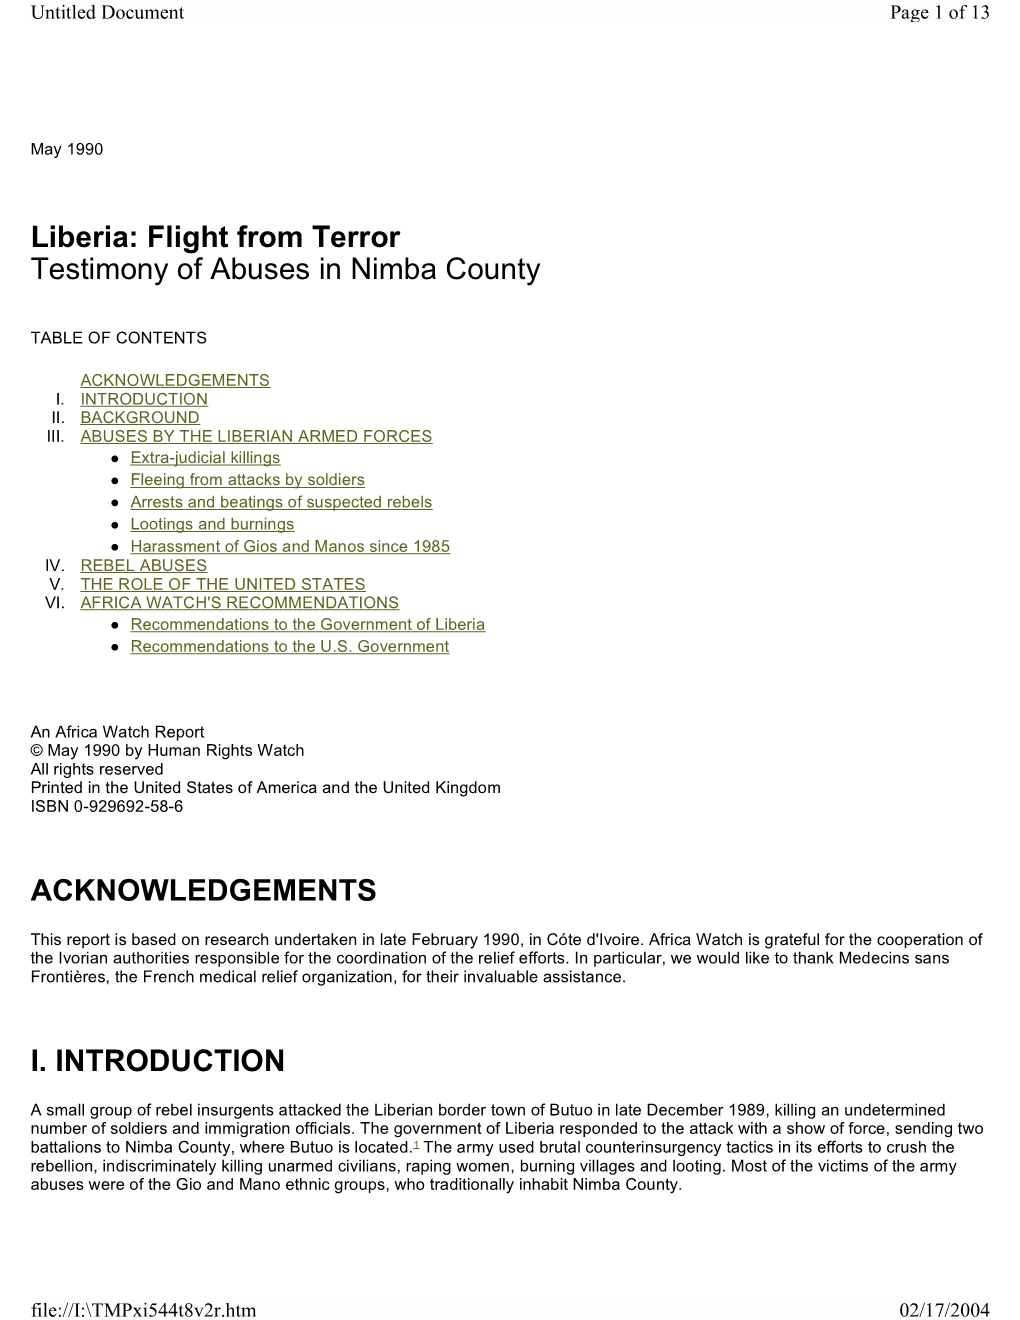 Liberia: Flight from Terror Testimony of Abuses in Nimba County